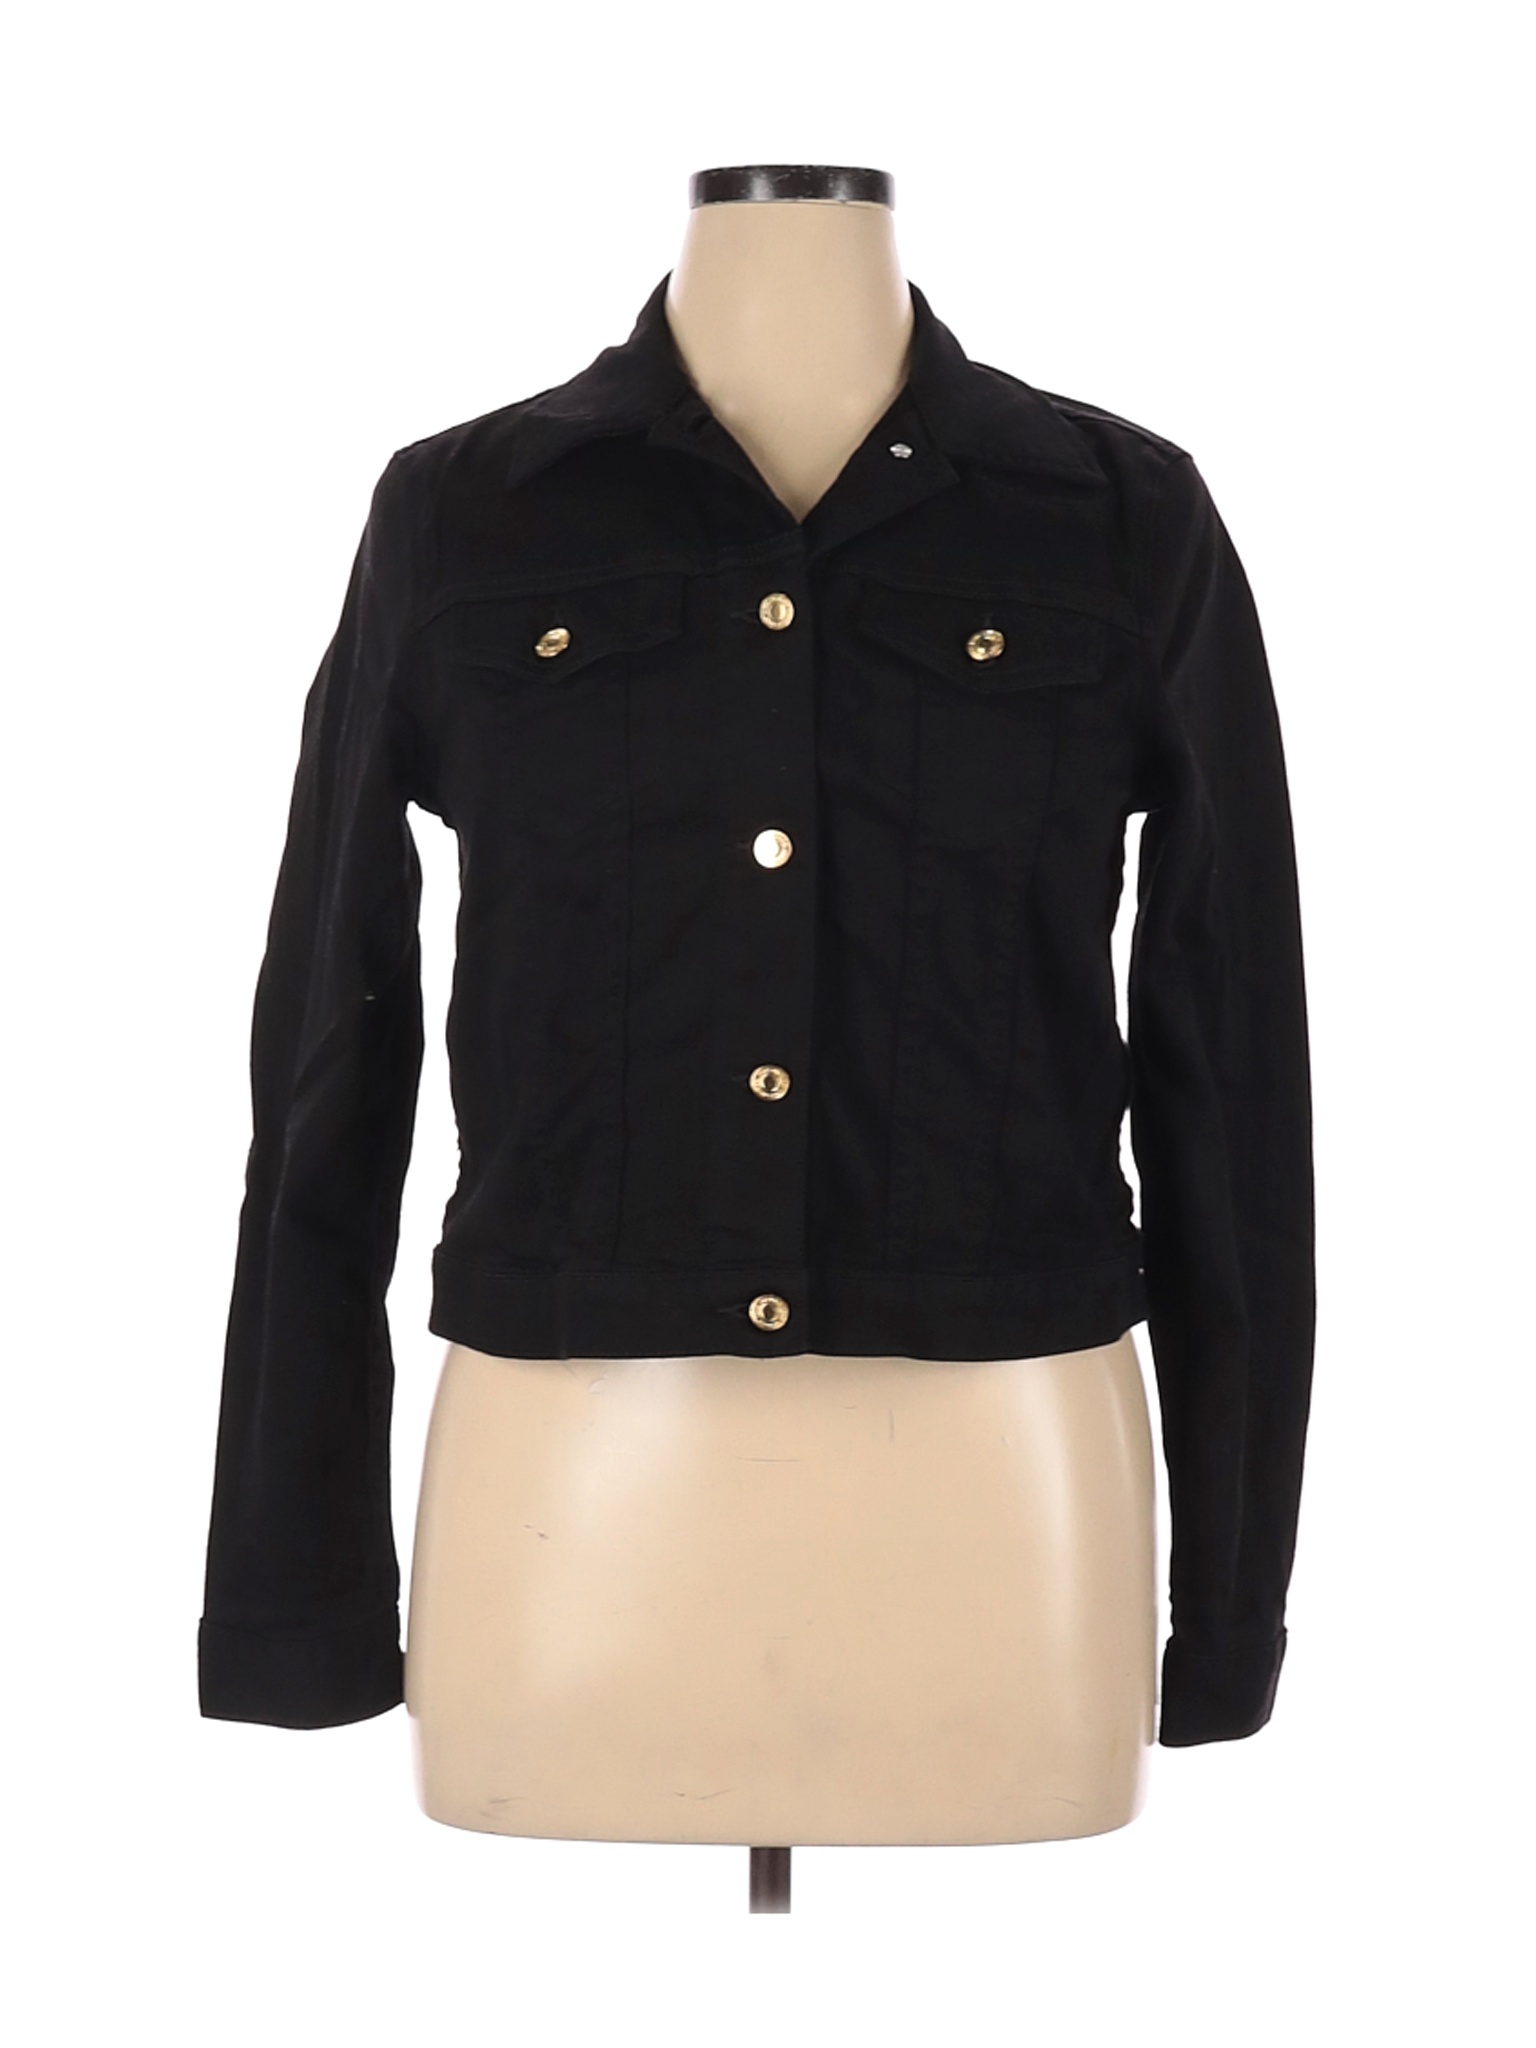 MICHAEL Michael Kors Women Black Denim Jacket L | eBay